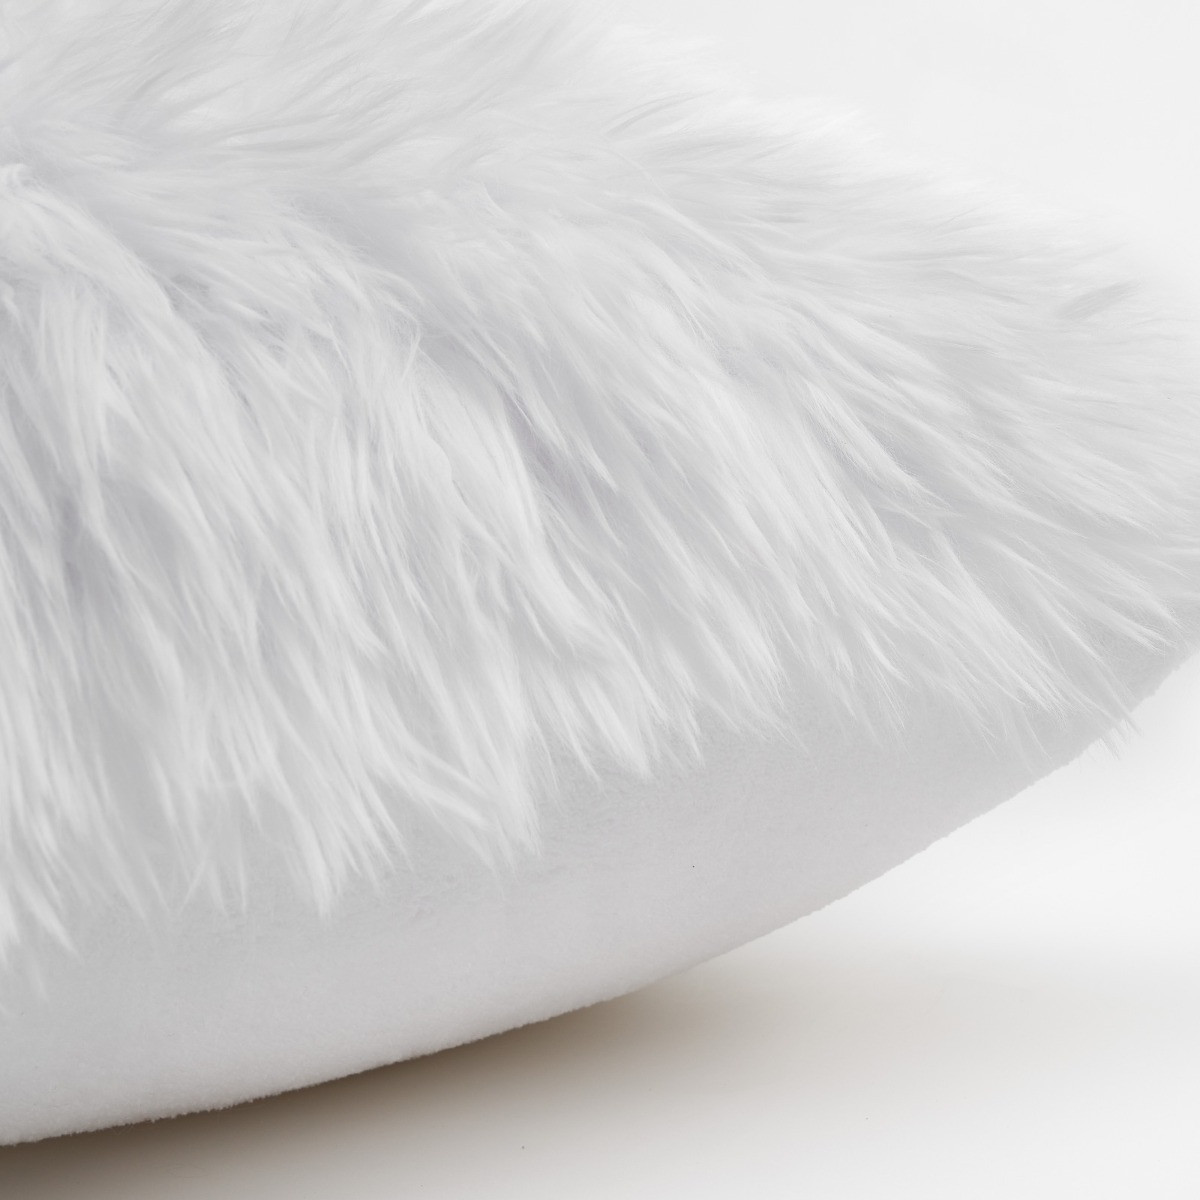 Sienna Luxury Faux Mongolian Fur Cushion Covers - White>